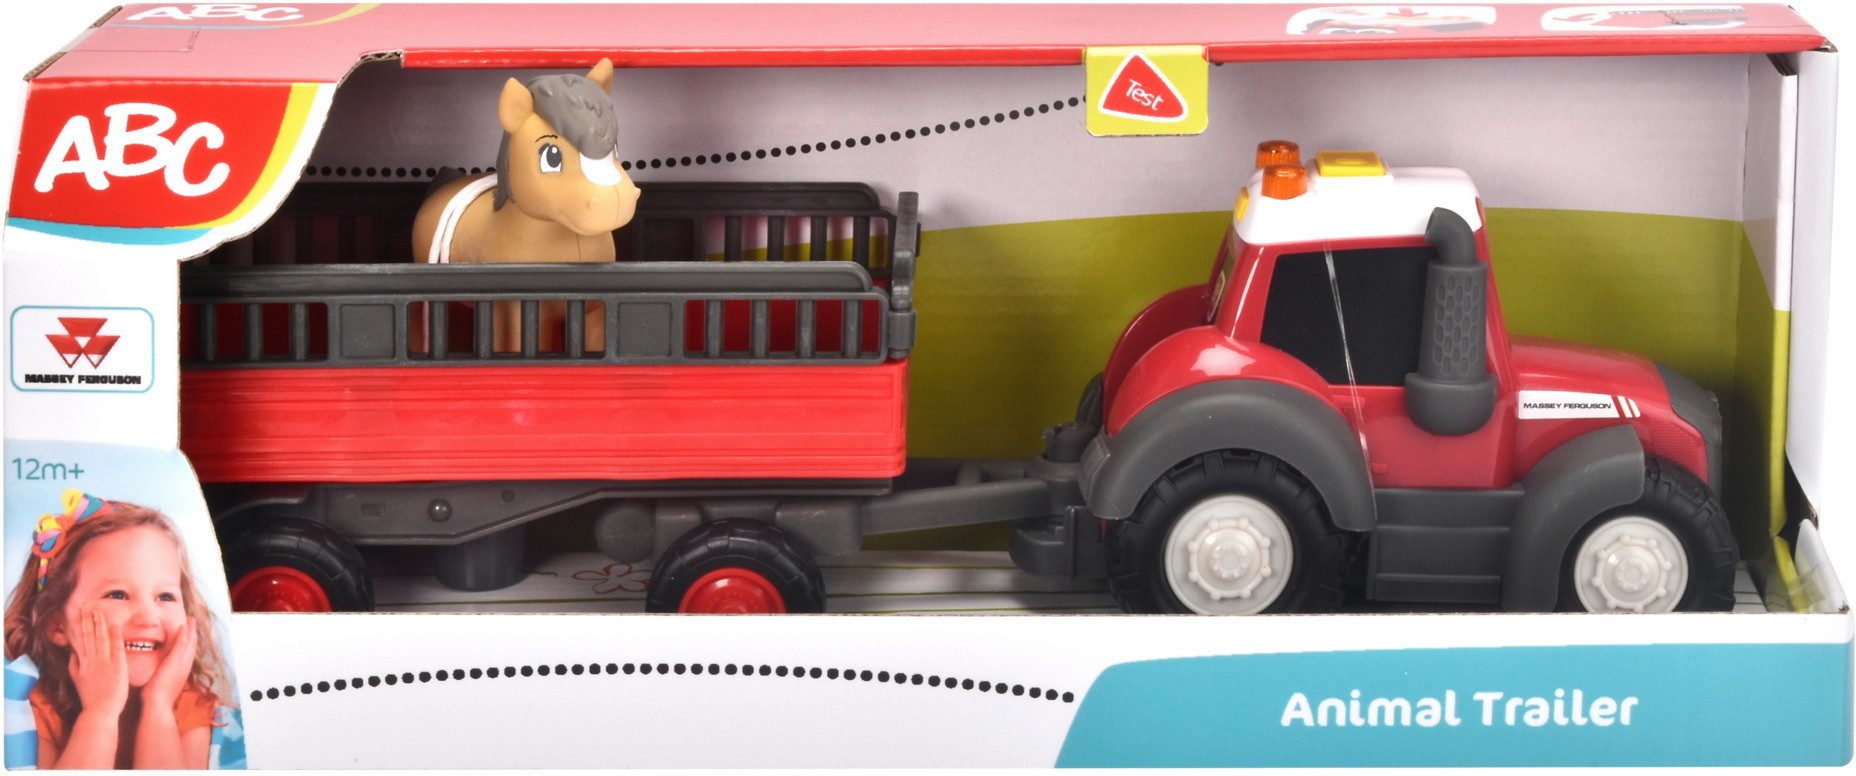 ABC-Dickie-Simba Spielzeug-Traktor ABC Baby- & Kleinkindspielzeug Traktor + Anhänger ABC Massey Ferguson